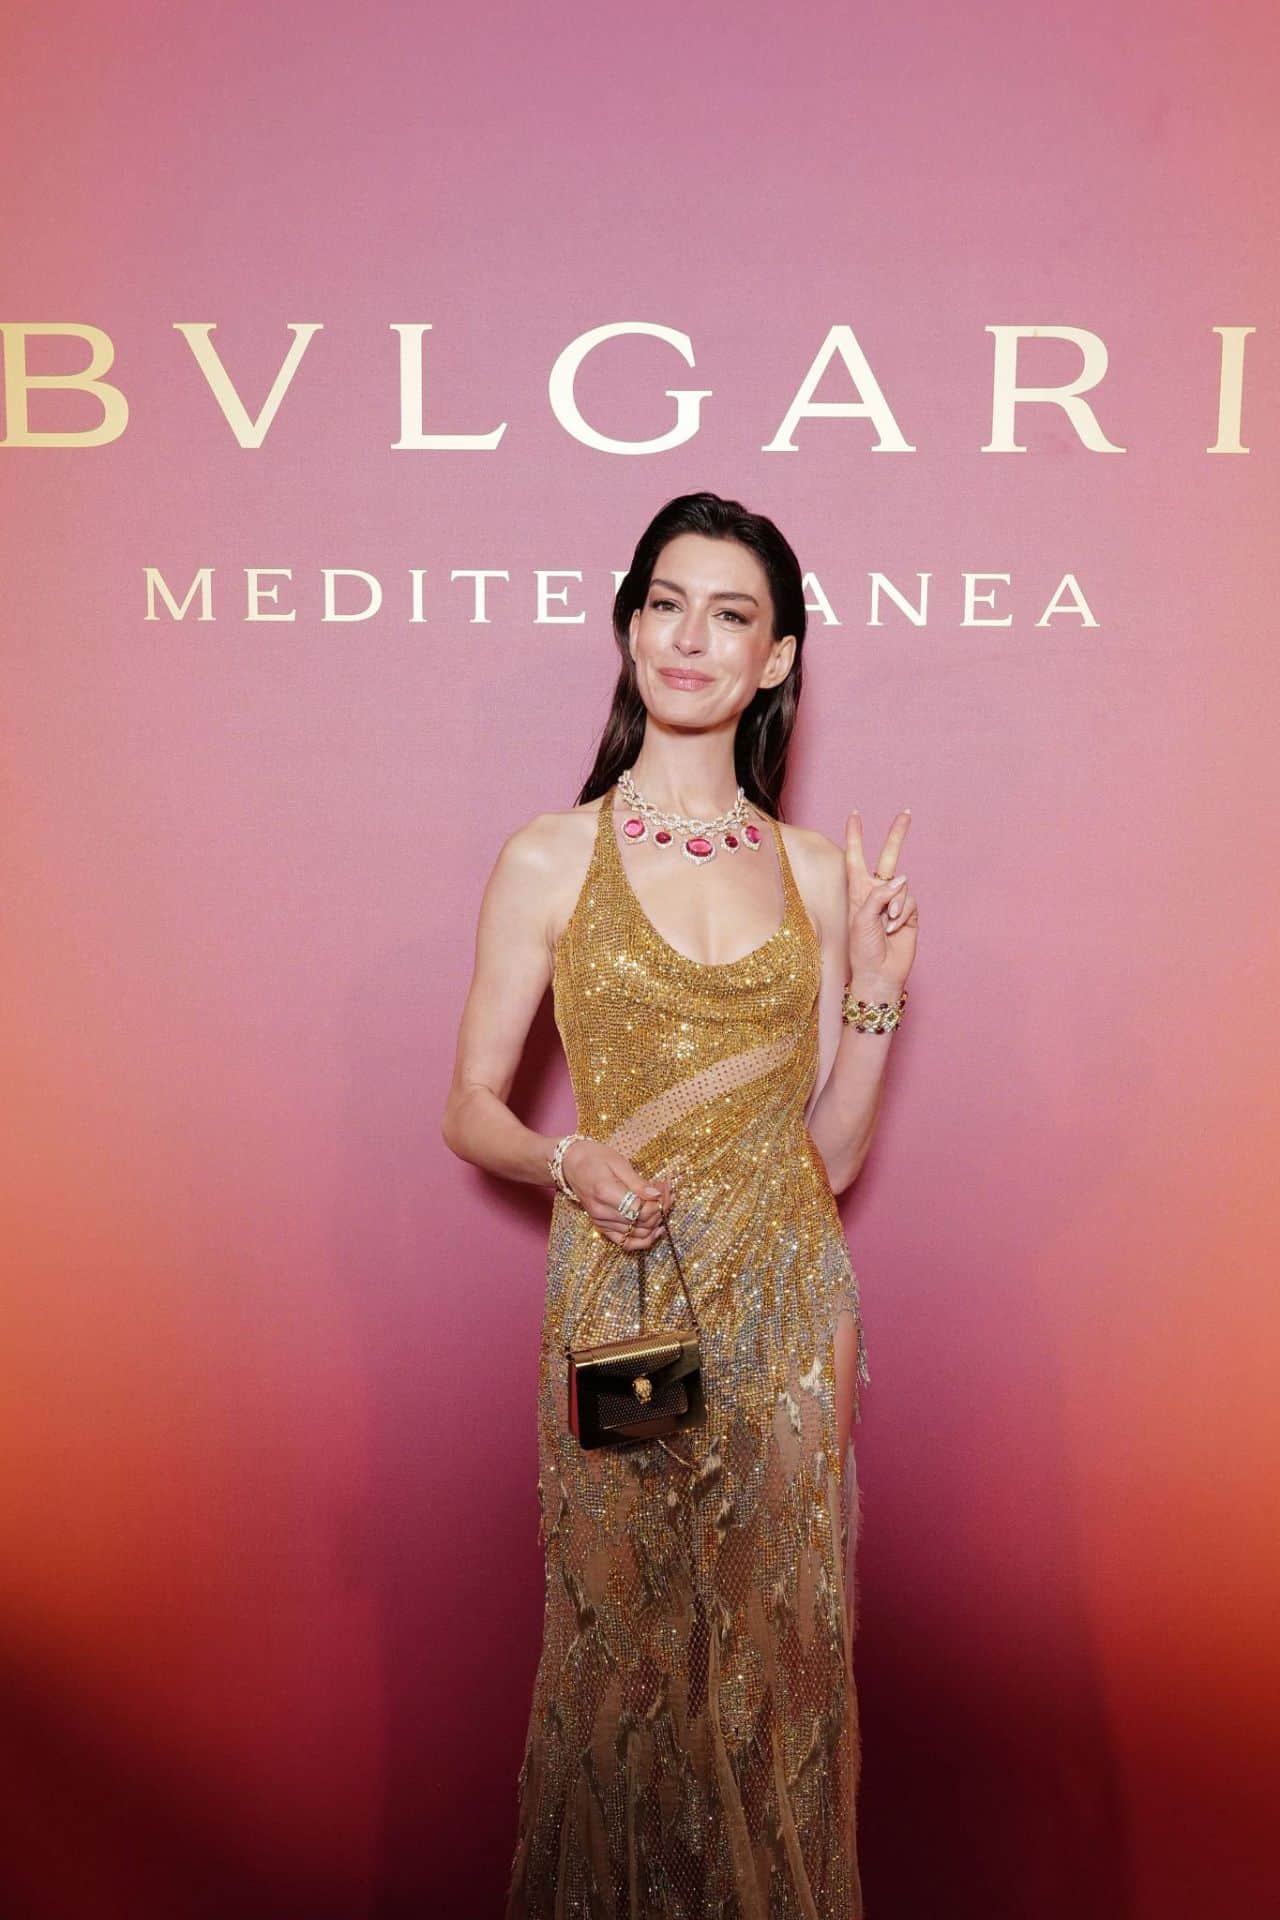 Anne Hathaway Shines at Bulgari’s “Mediterranea” High Jewelry Show